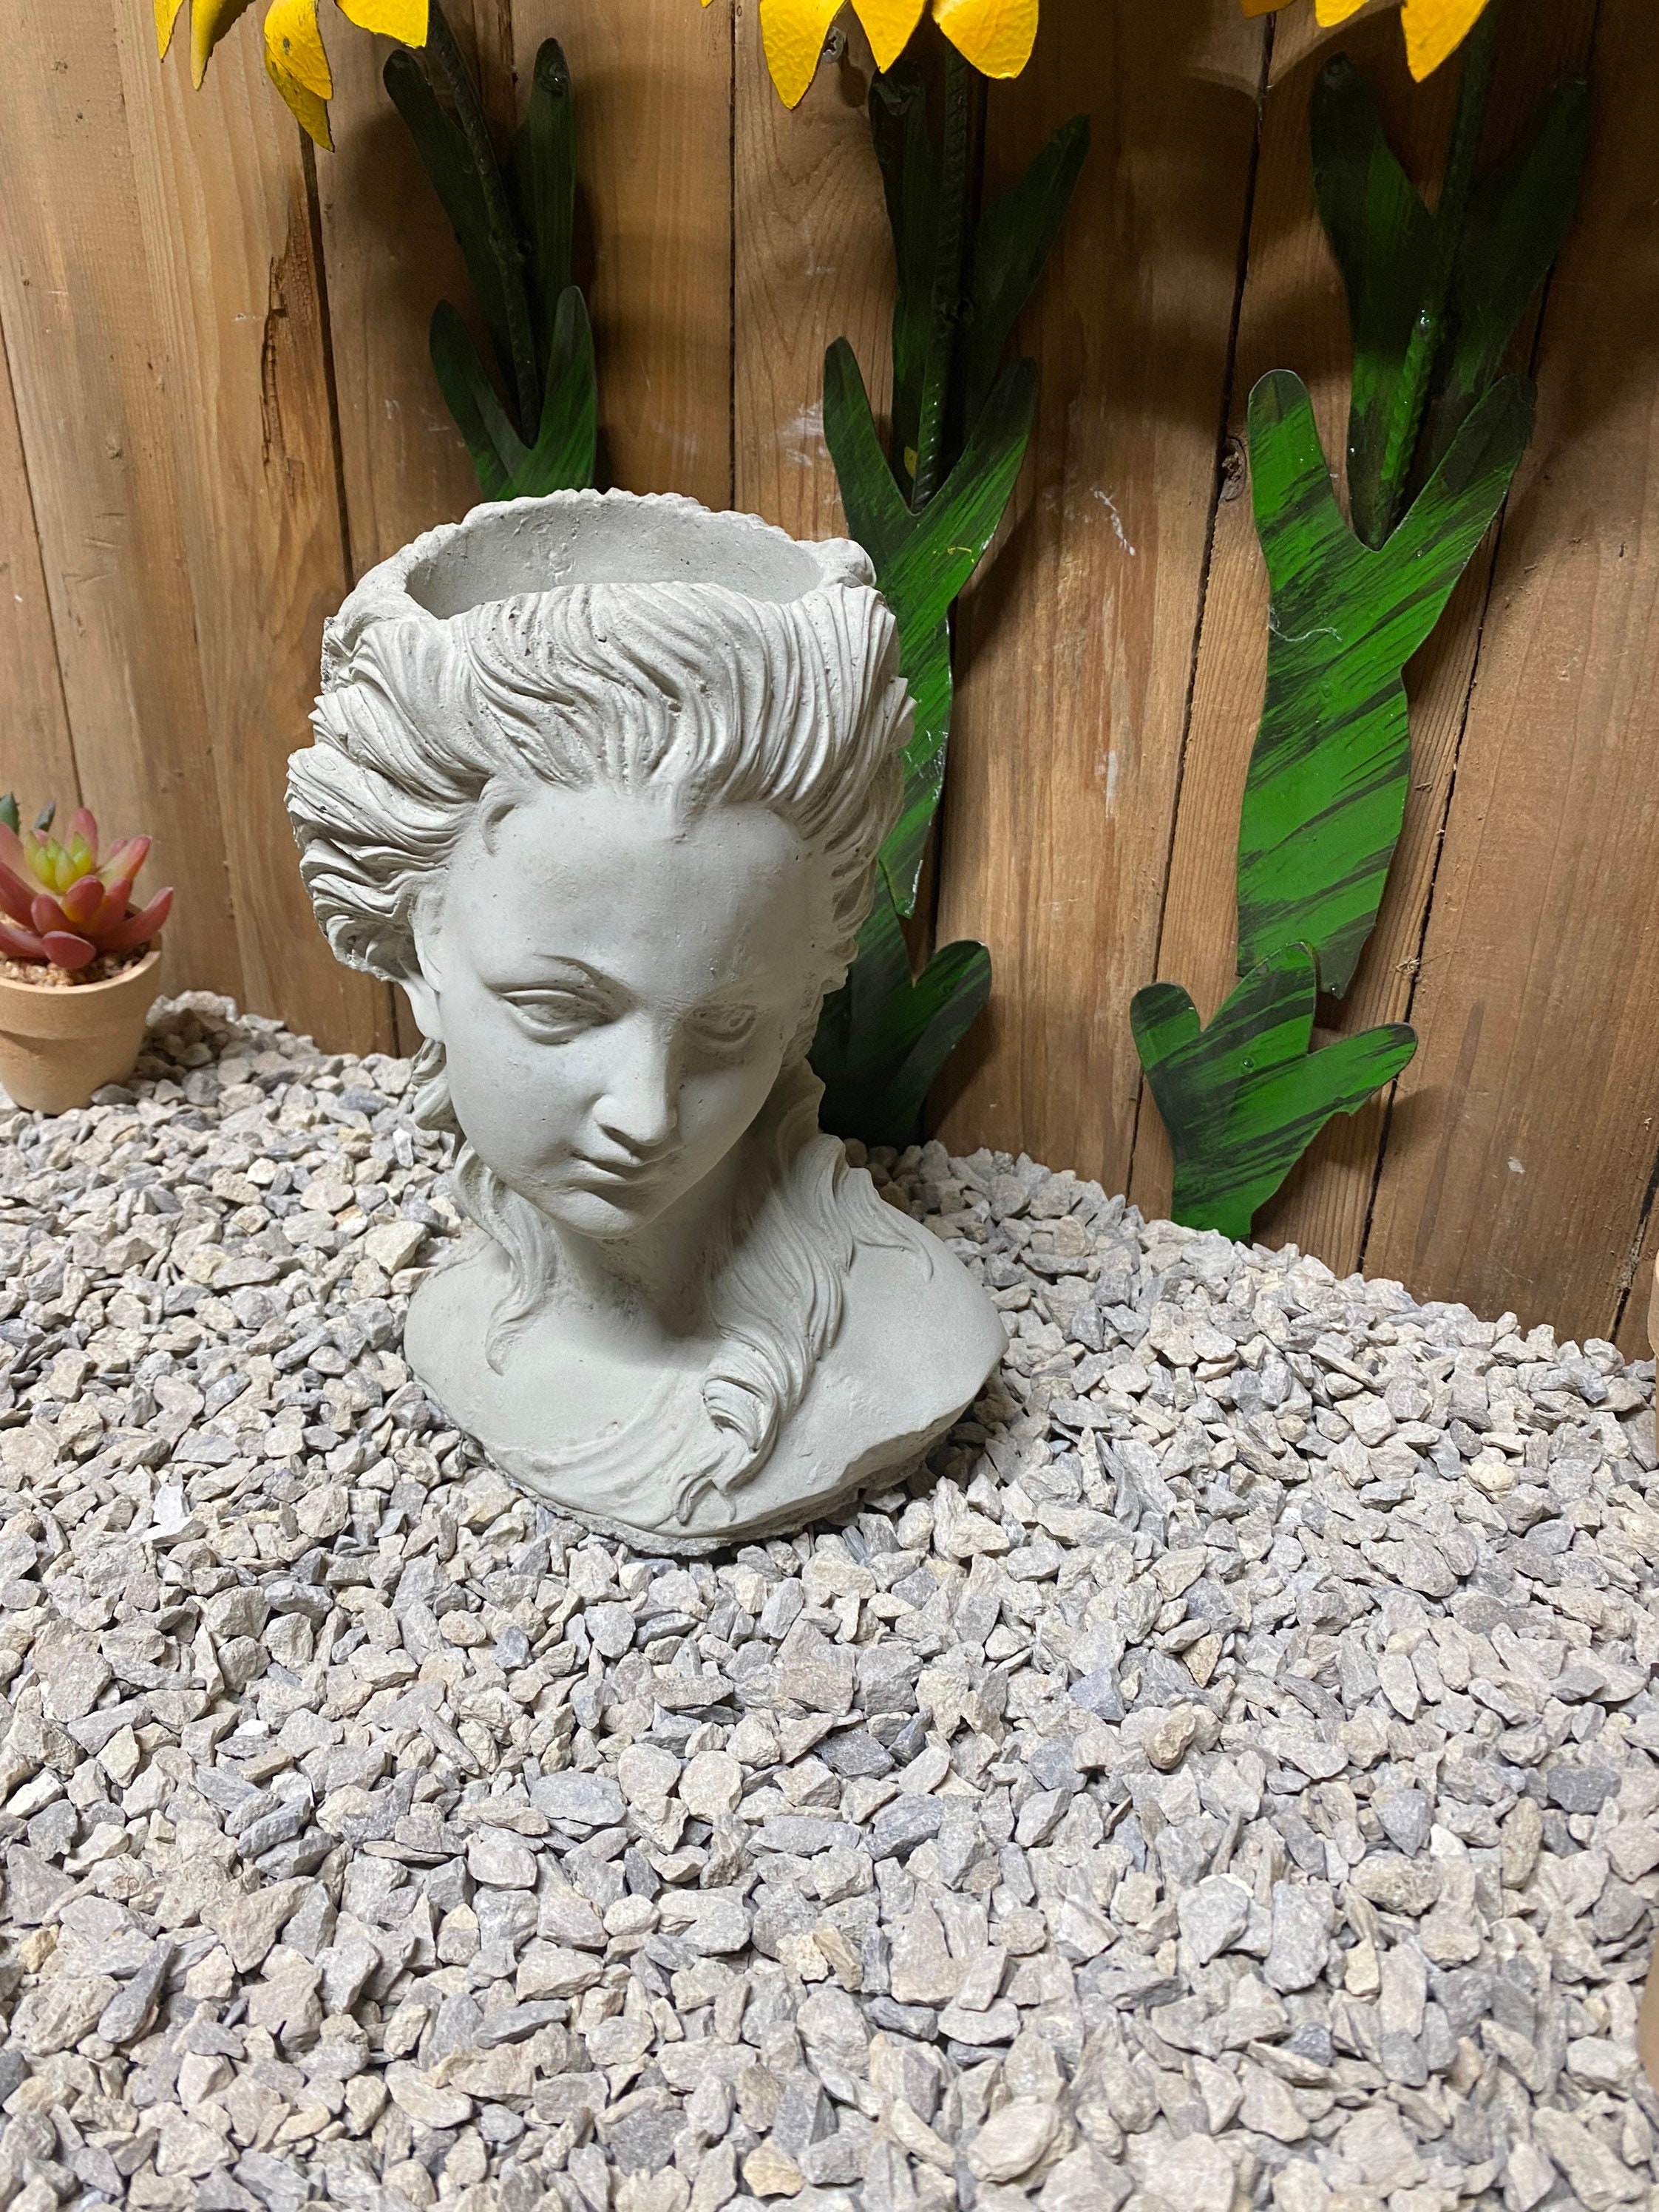 Lady head planter concrete statue indoor/ outdoor home and garden decor